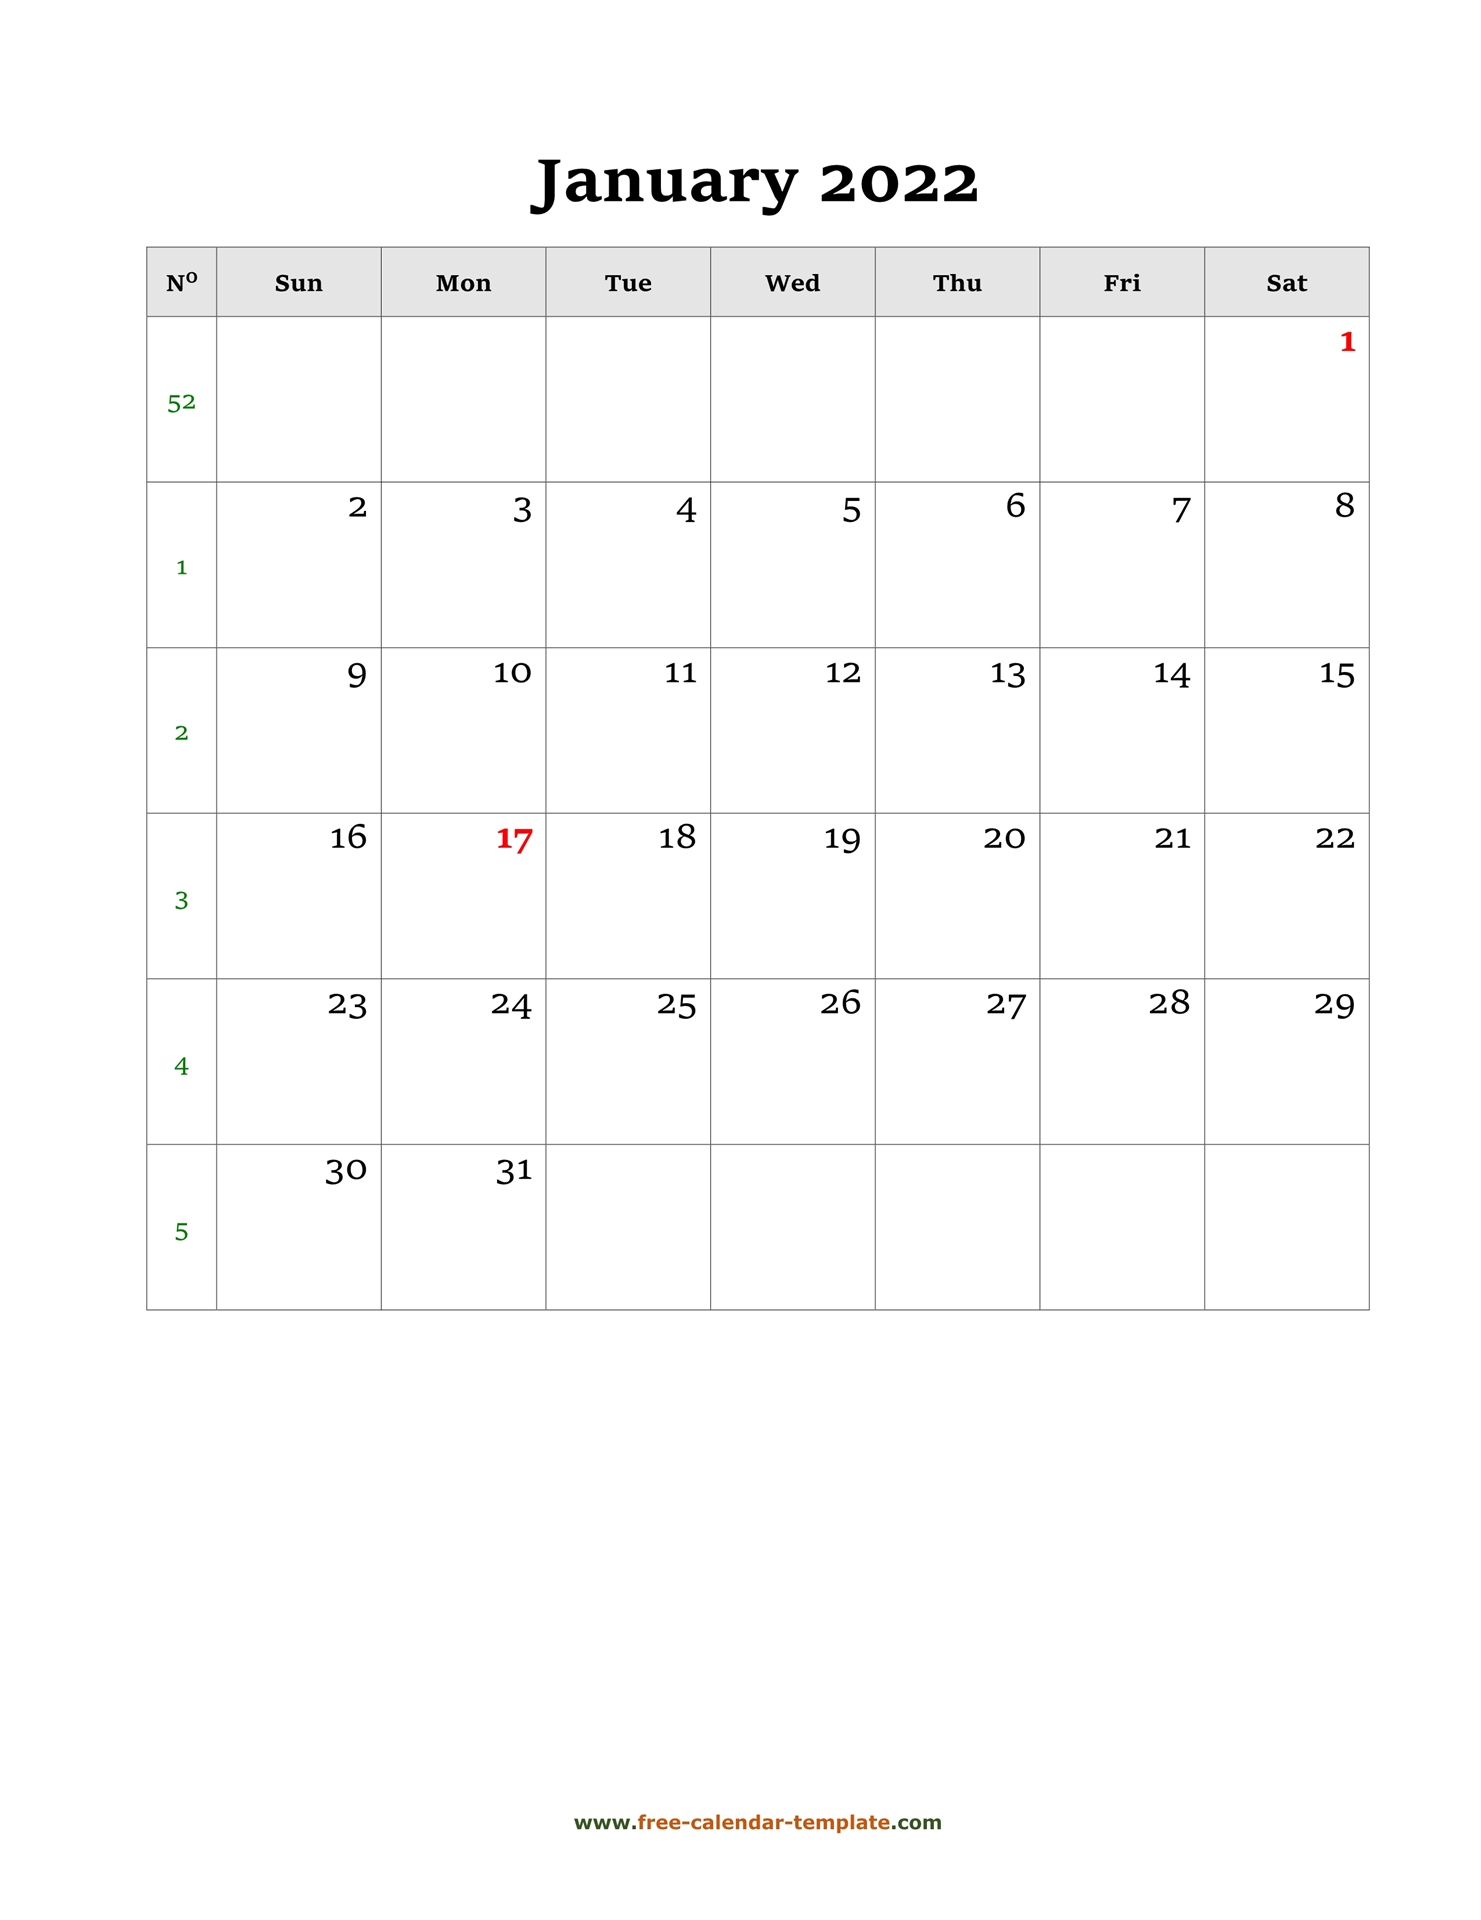 January Calendar 2022 Simple Design With Large Box On Each